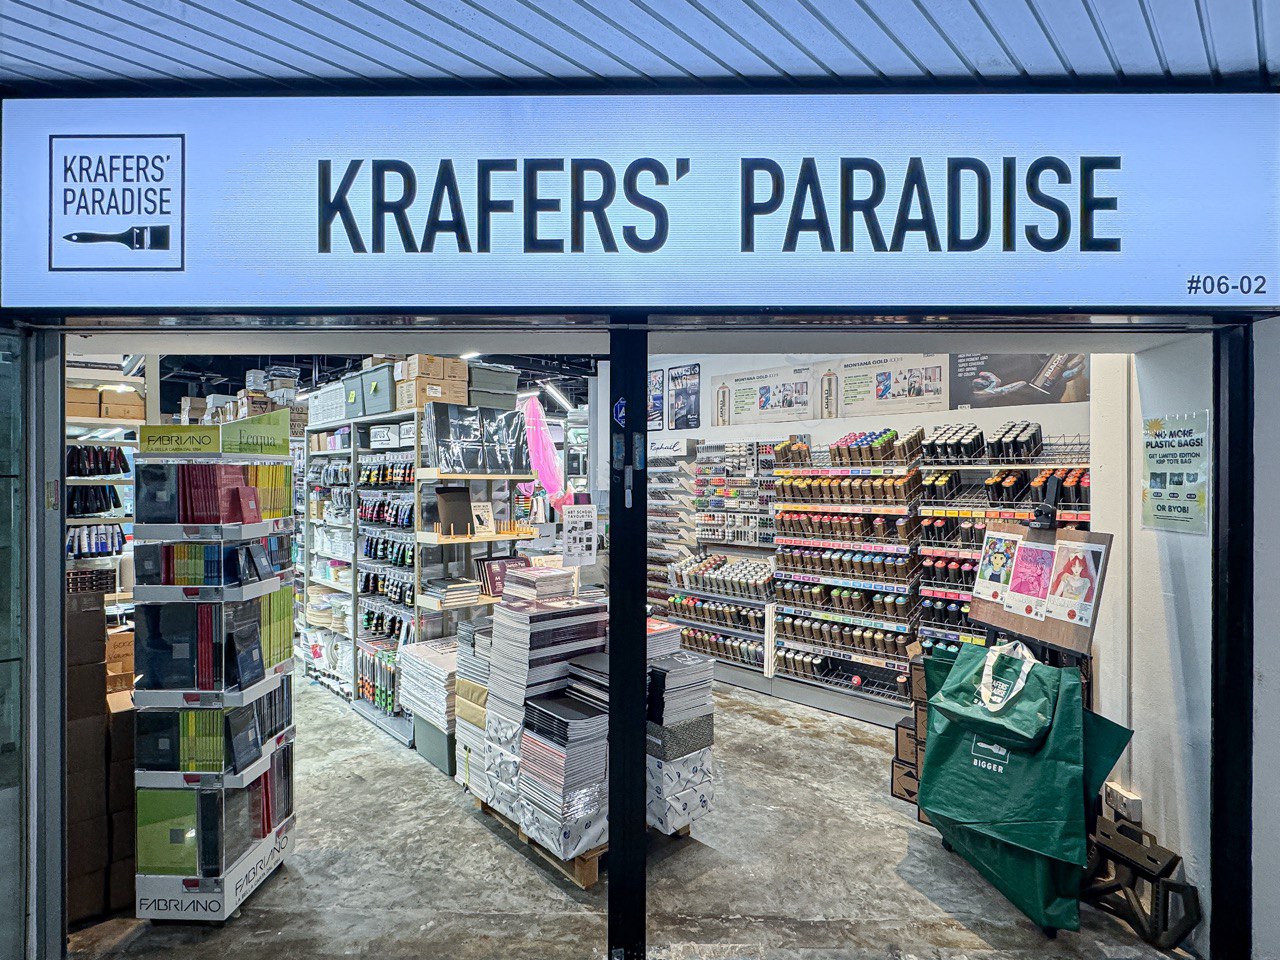 Krafers‘ Paradise